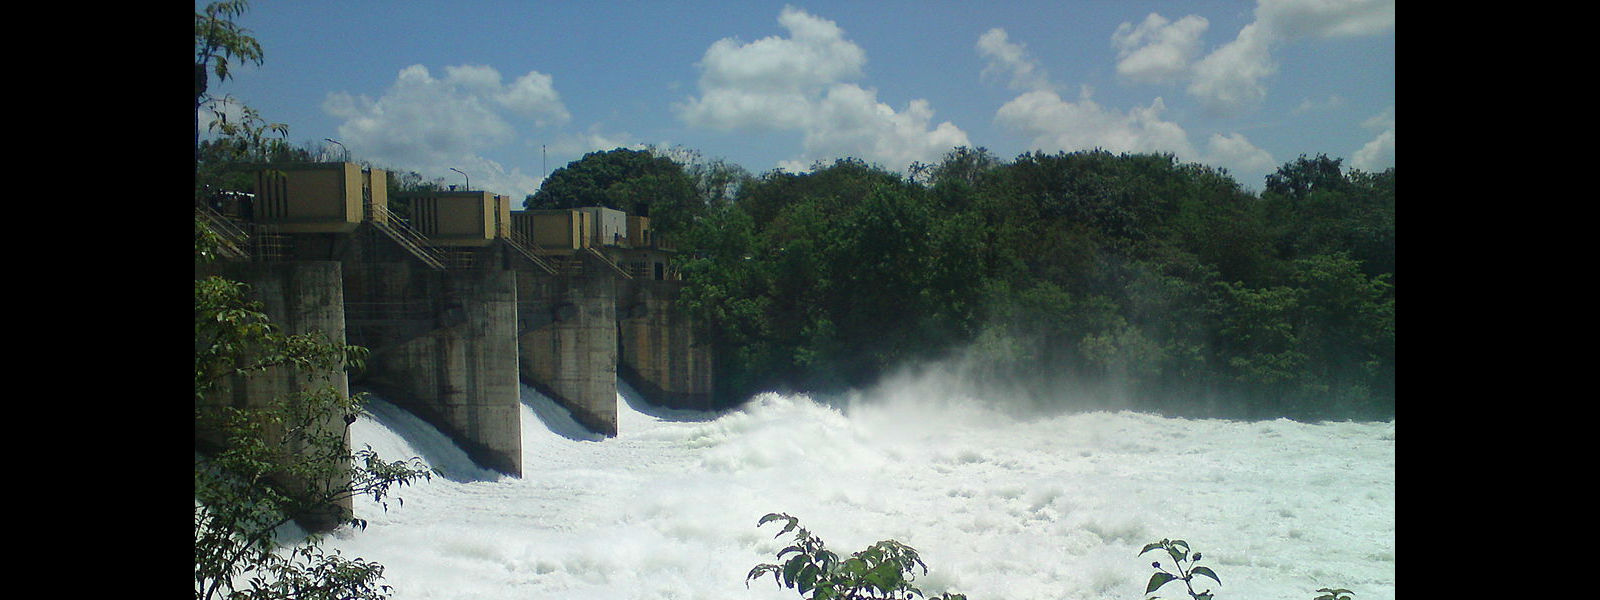 Spill gates of Udawalawa reservoir opened